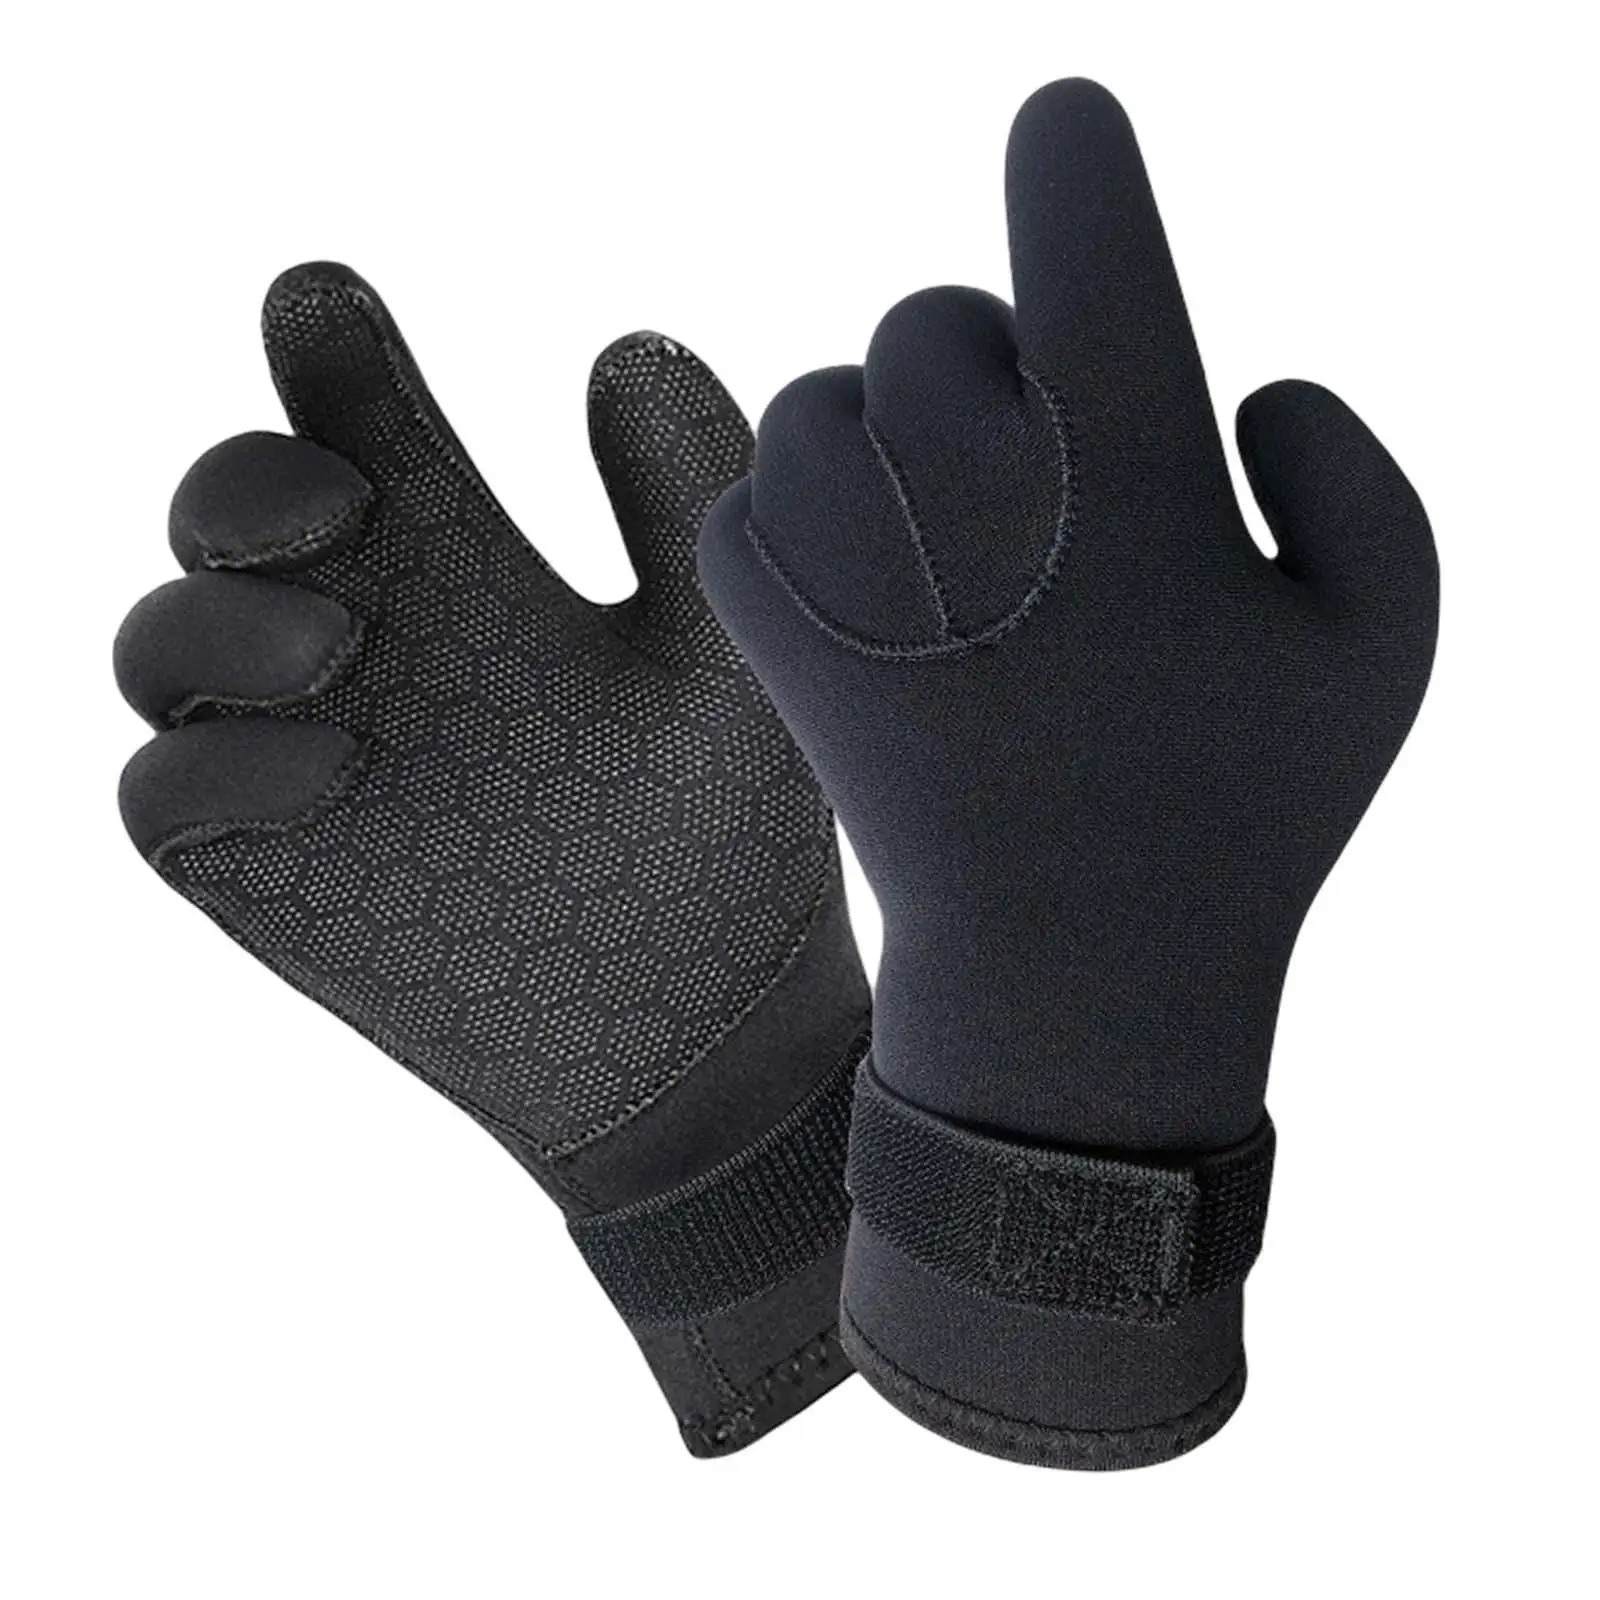 Diving Gloves Thermal Wetsuit Gloves Warm Dive Gloves Five Finger Wetsuit Gloves for Water Sports Snorkeling Rafting Kayaking